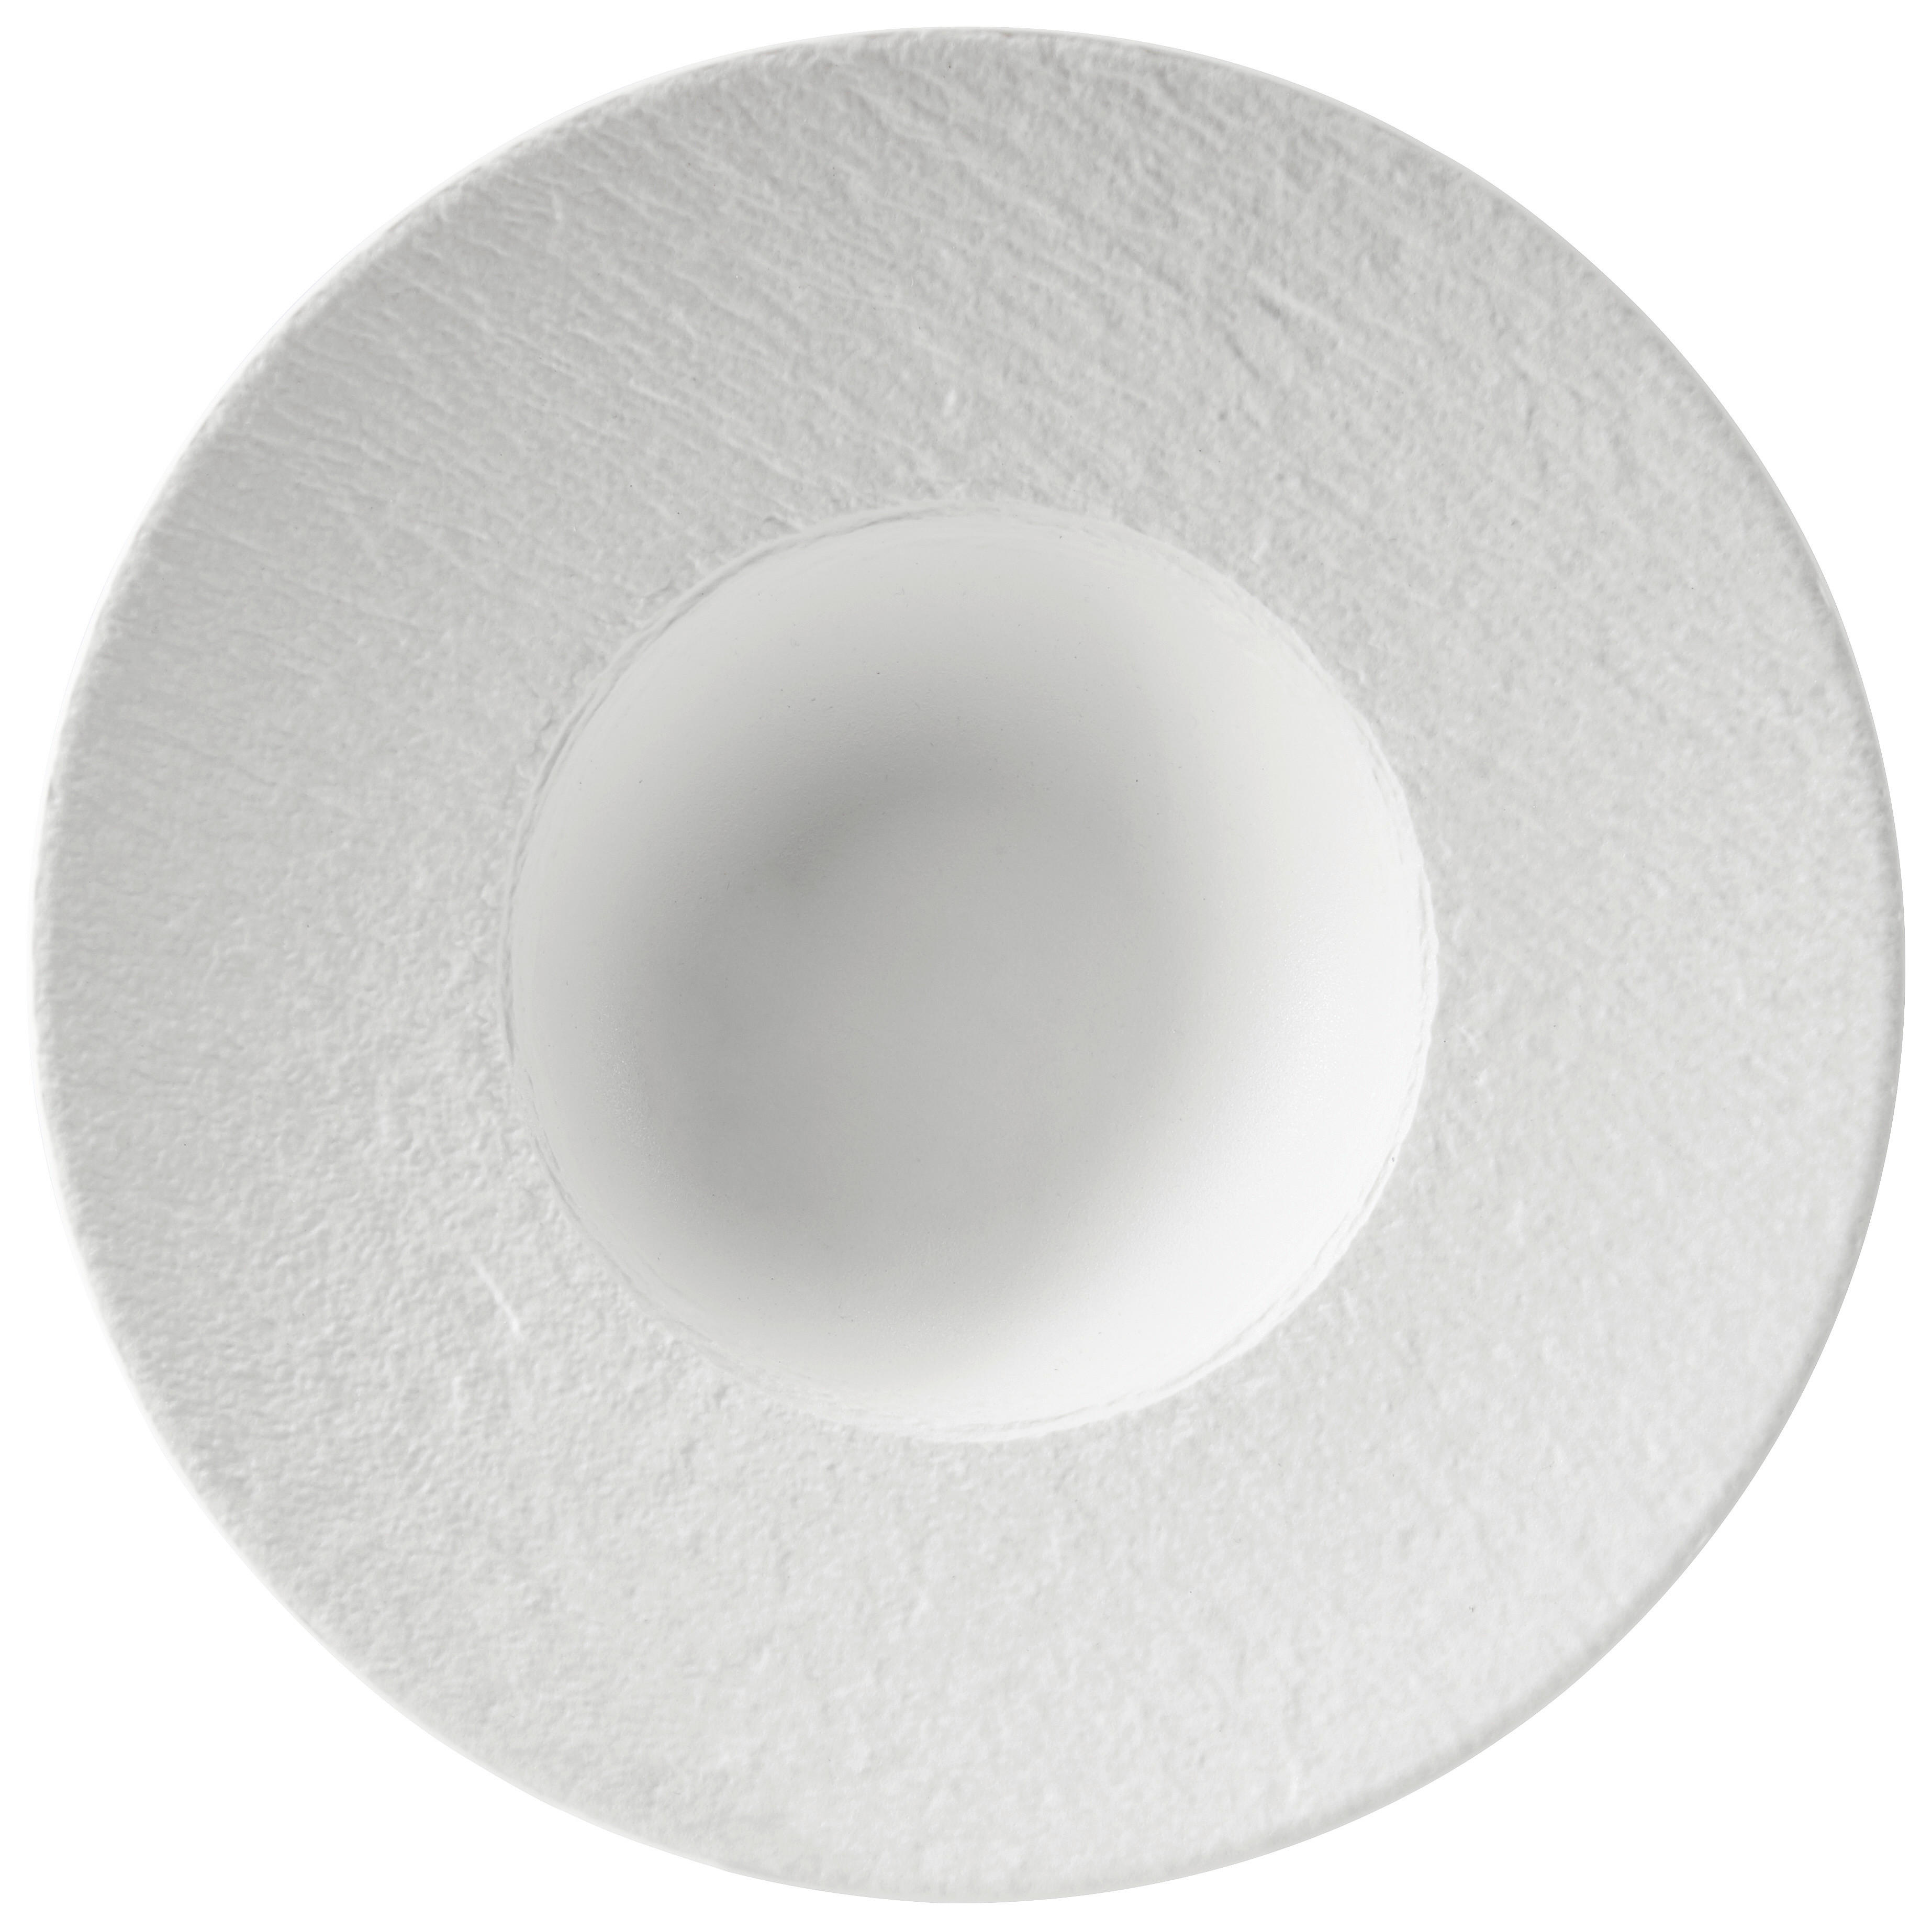 PASTATELLER Manufacture Rock blanc 29 cm  - Weiß, Keramik (29cm) - Villeroy & Boch